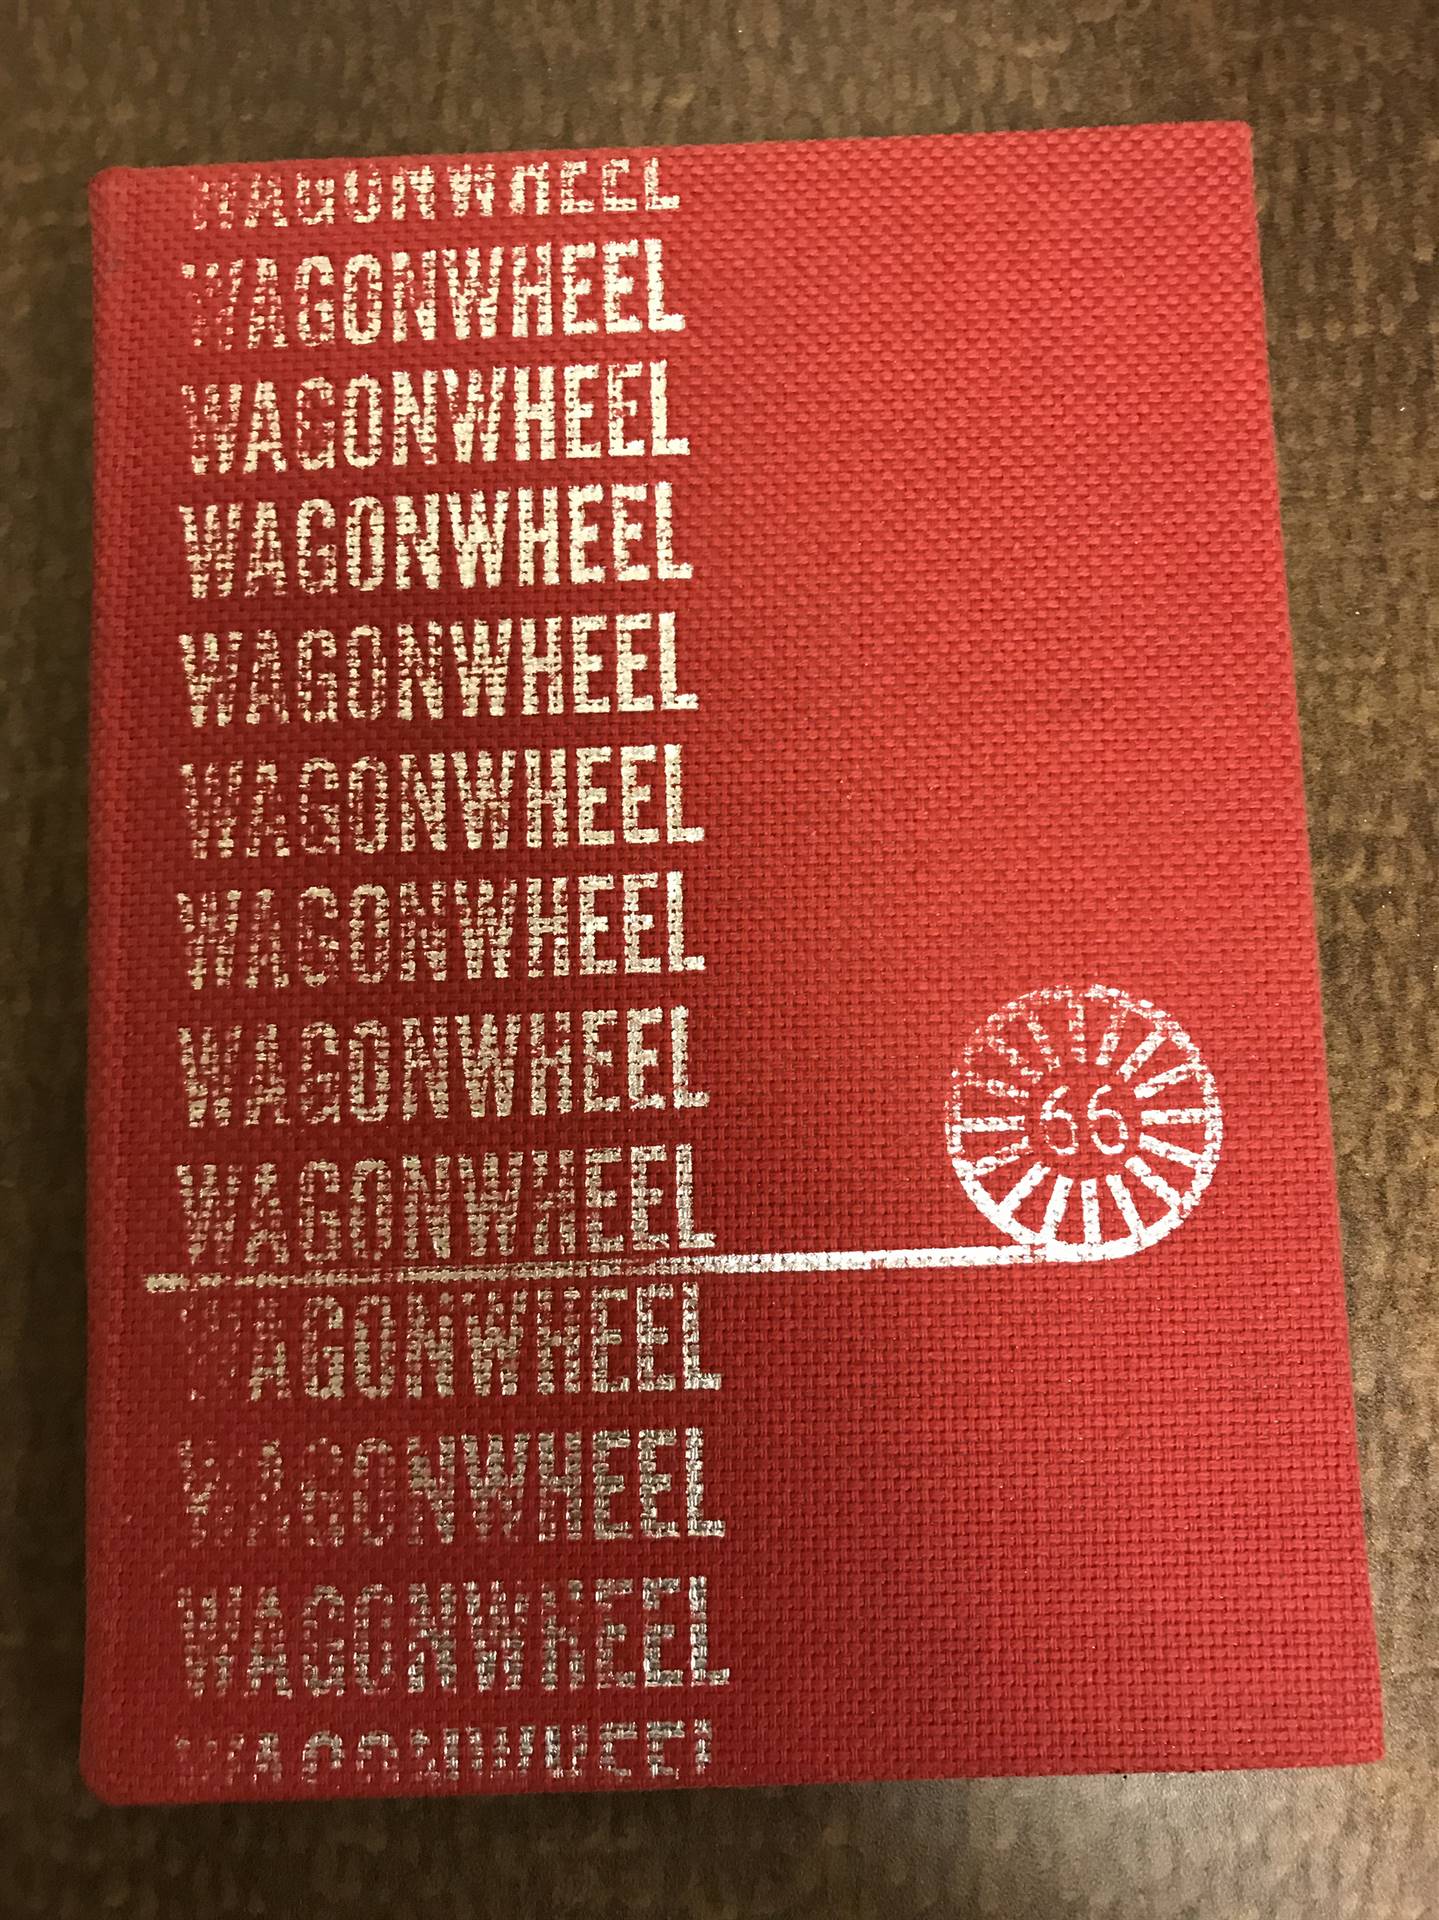 Wagonwheel 1966